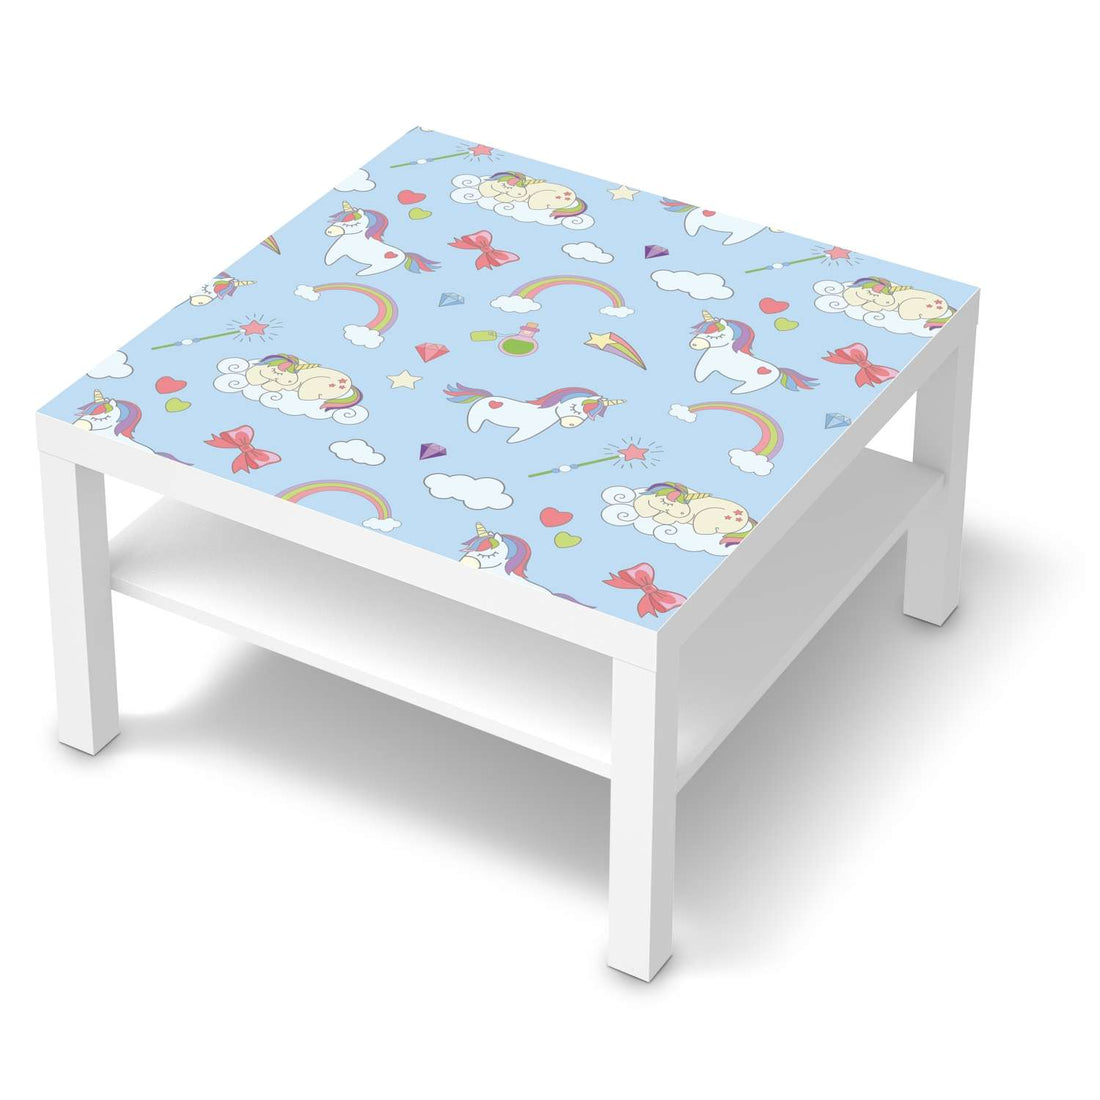 Selbstklebende Folie Rainbow Unicorn - IKEA Lack Tisch 78x78 cm - weiss